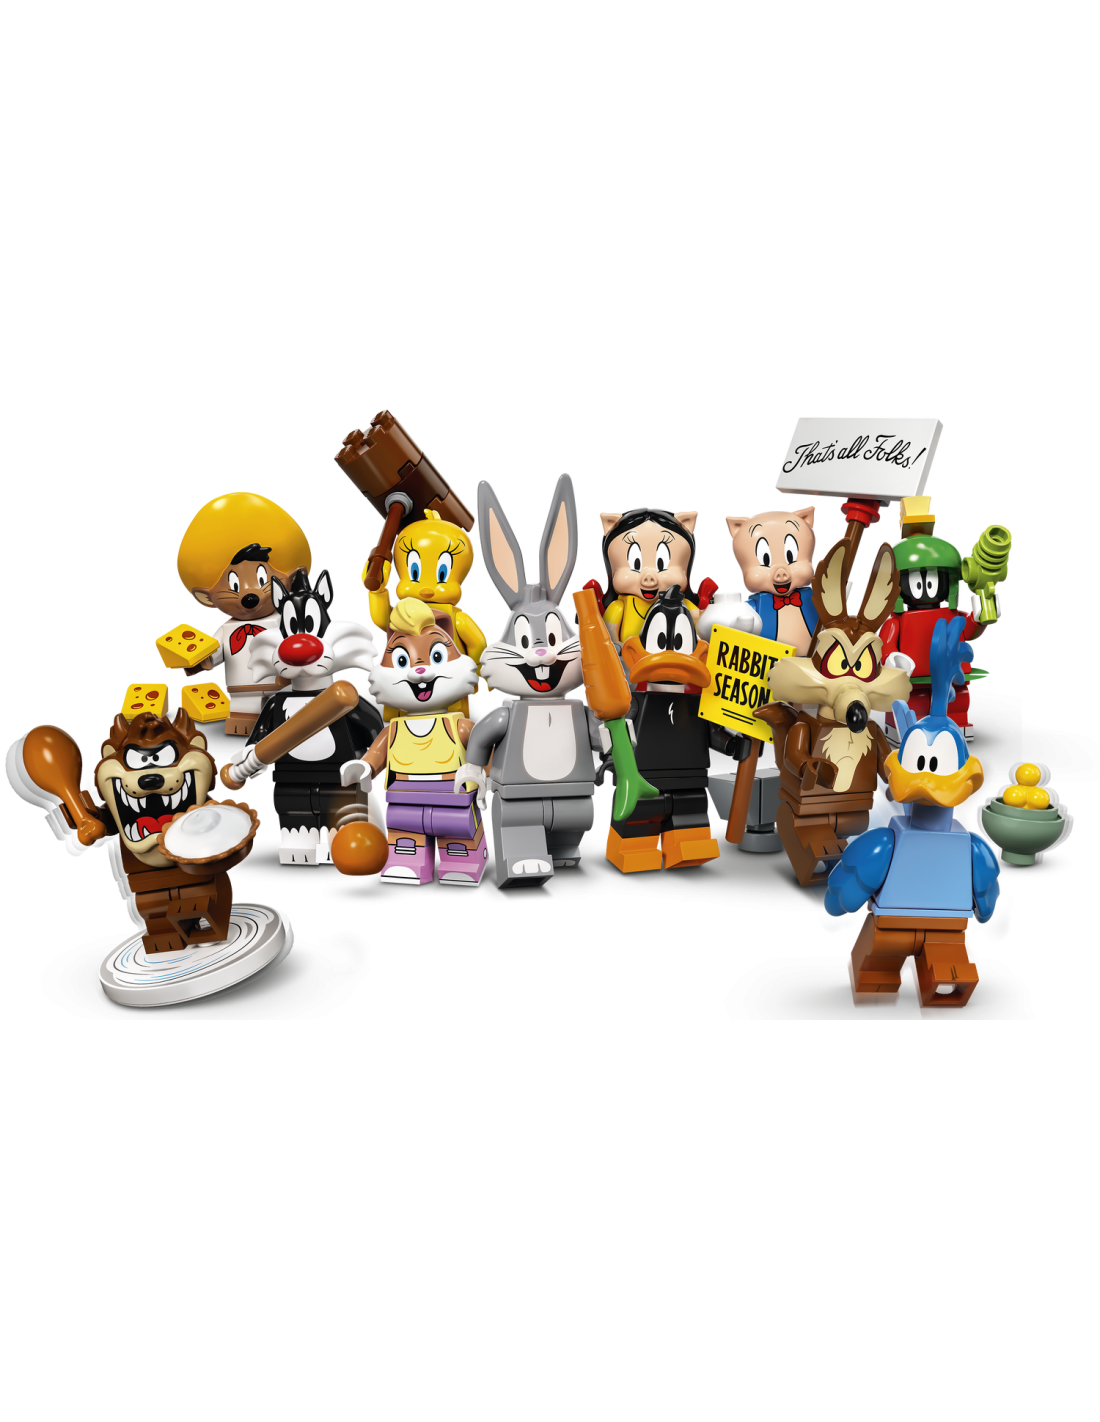 LEGO Minifigures Looney Tunes 71030 - LEGO, LEGO Minifigures